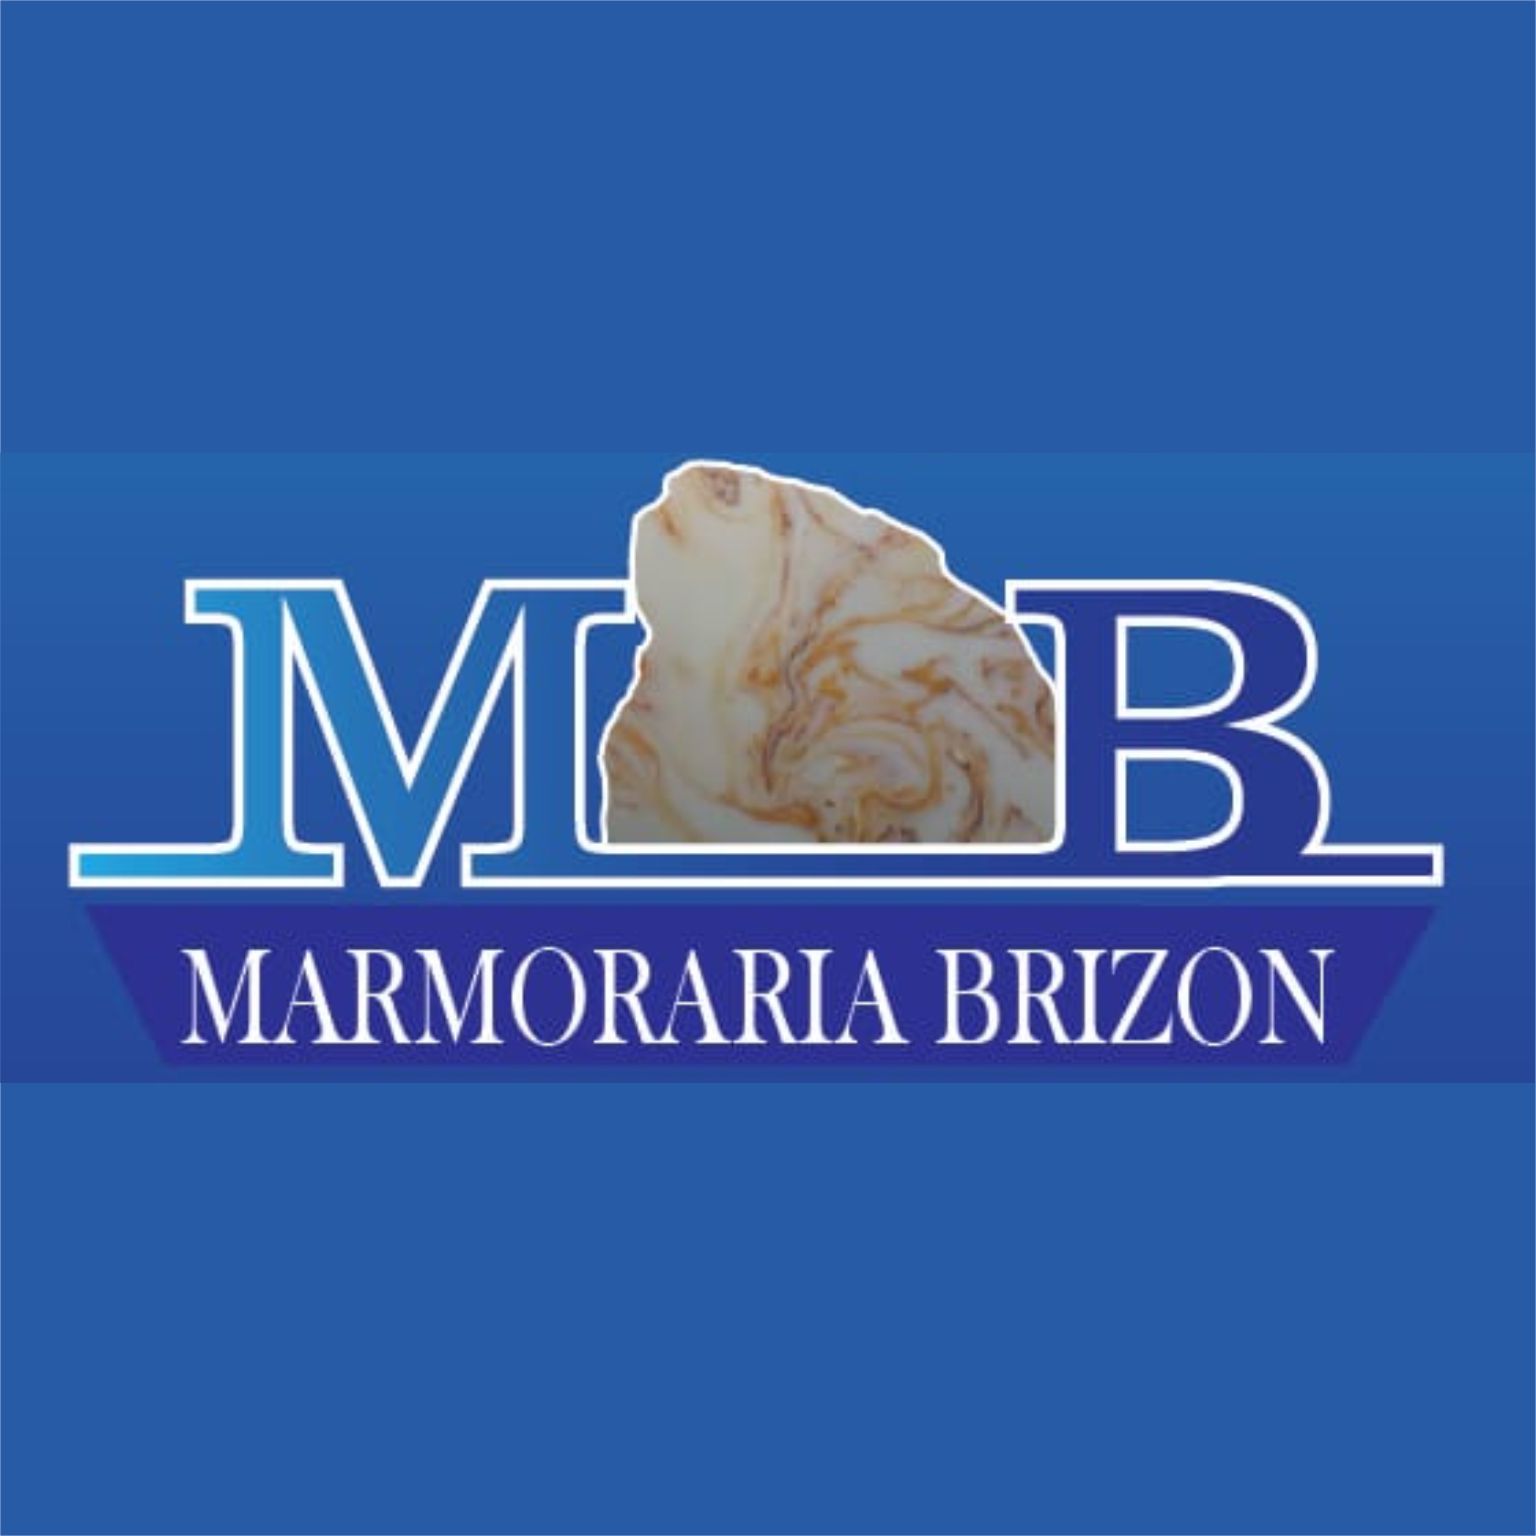 Marmoraria Brizon